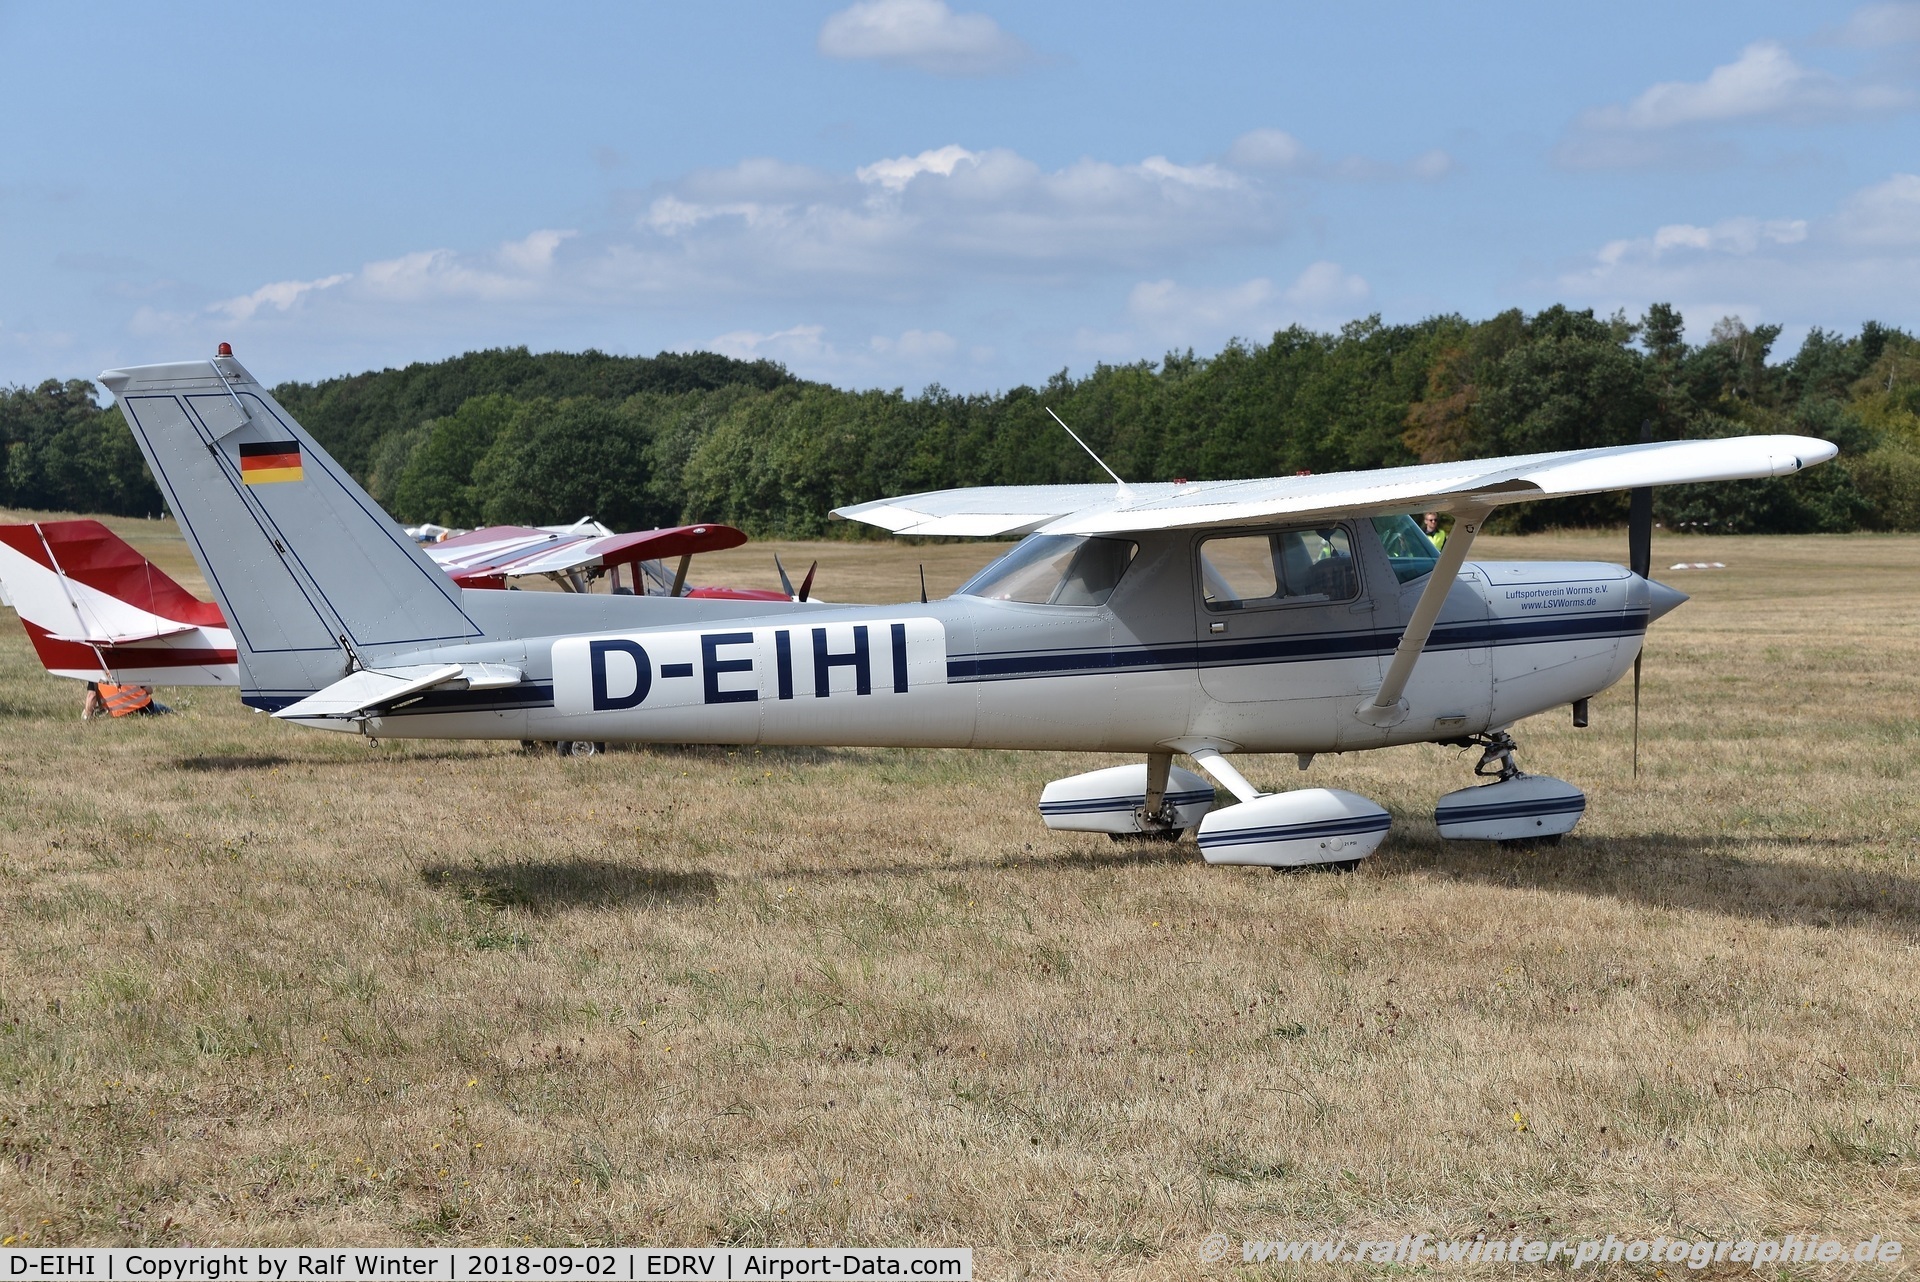 D-EIHI, Cessna 152 C/N 1591, Cessna 152 - Luftsportverein Worms - 1591 - D-EIHI - 02.09.2018 - EDRV